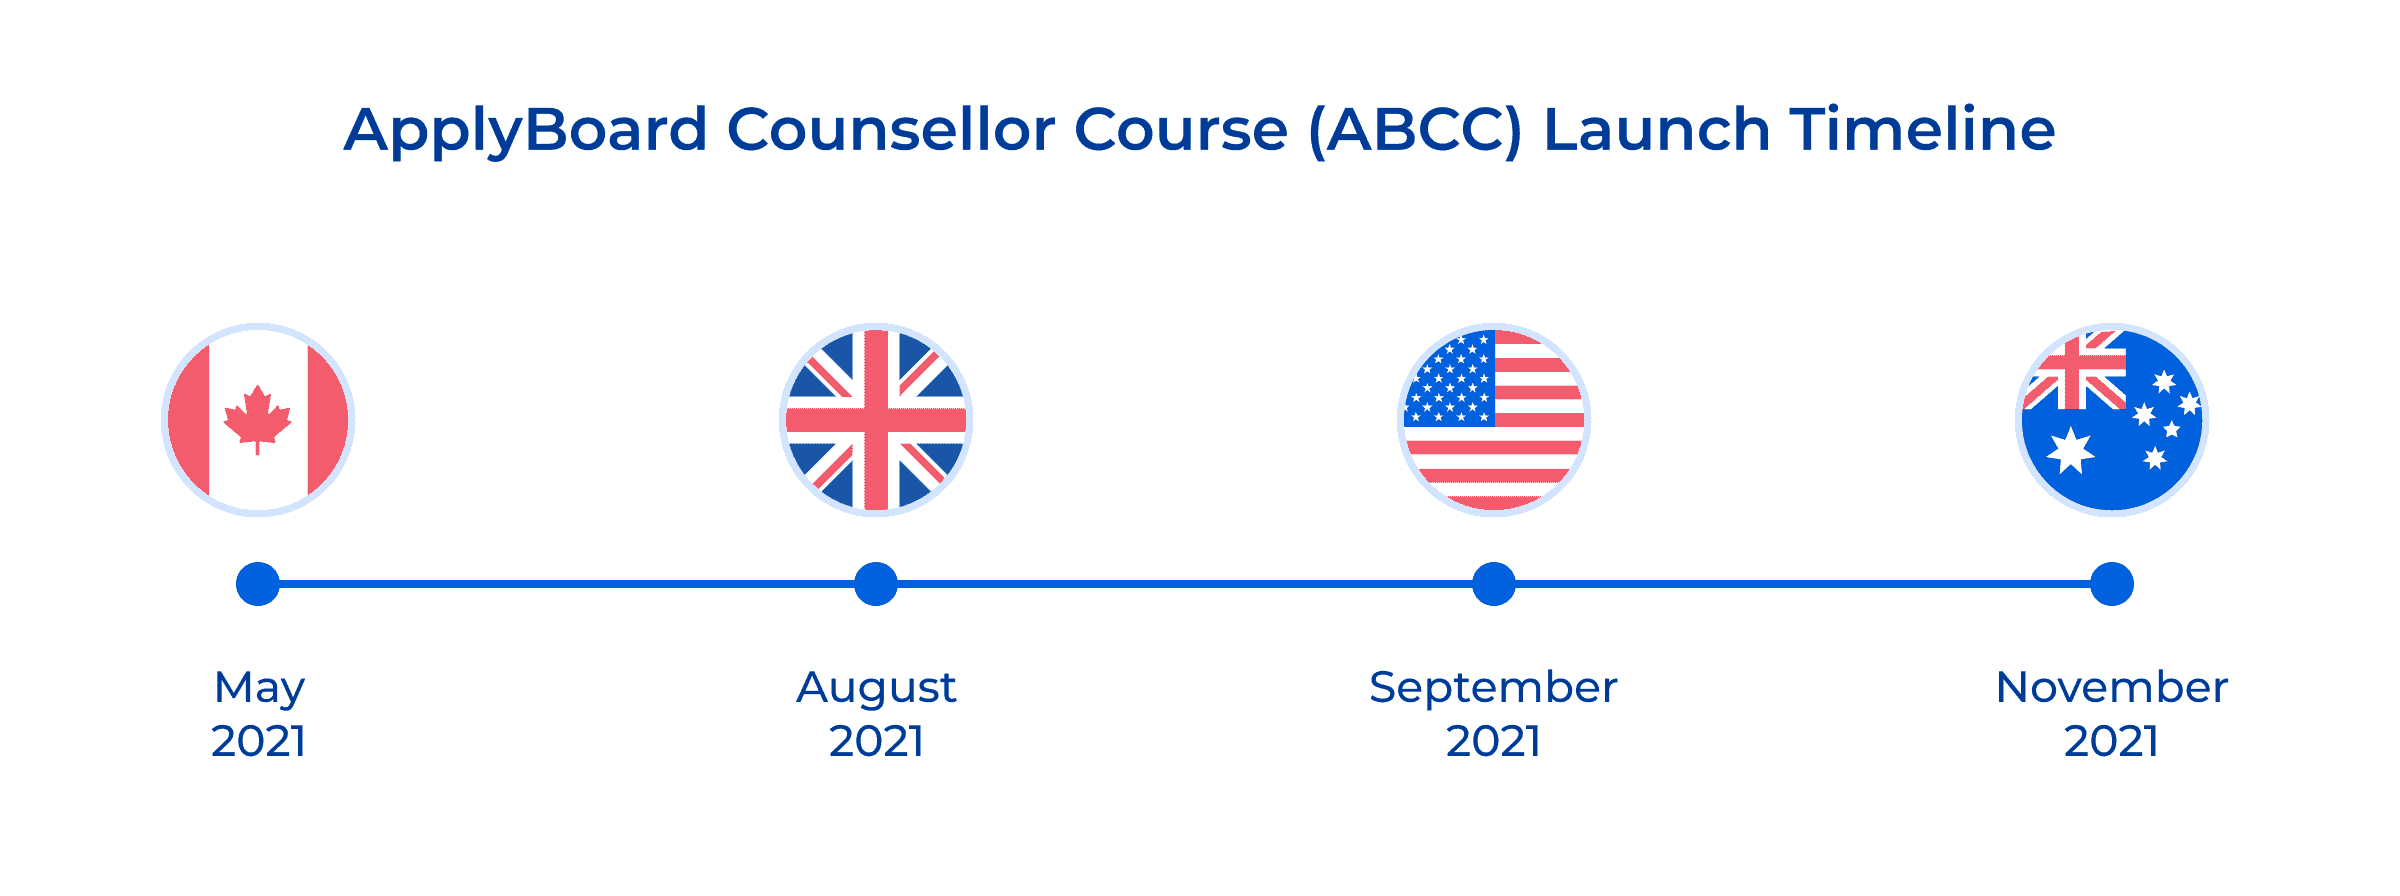 ABCC Course Timeline